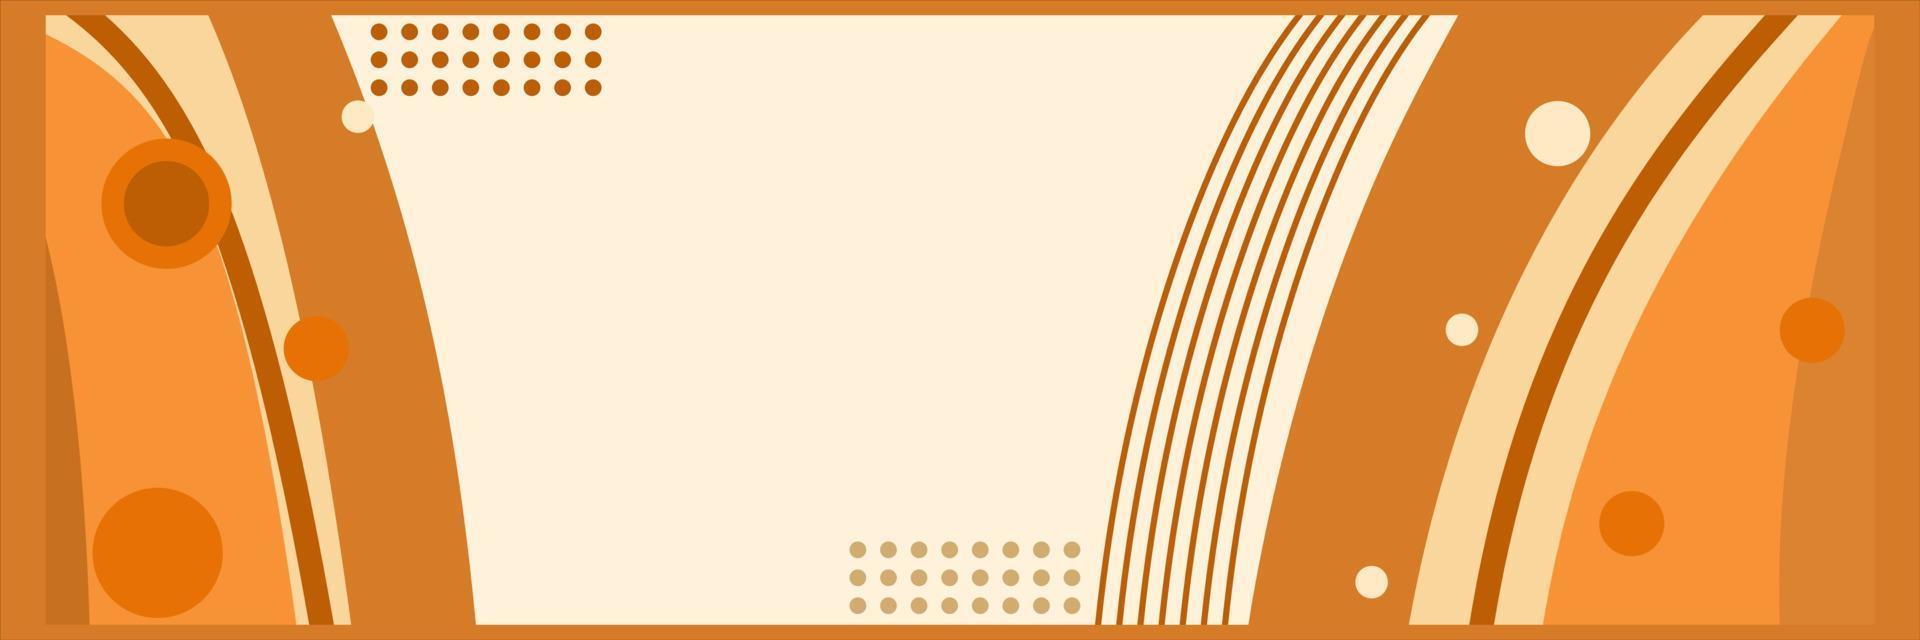 background abstract orange  flat design vector